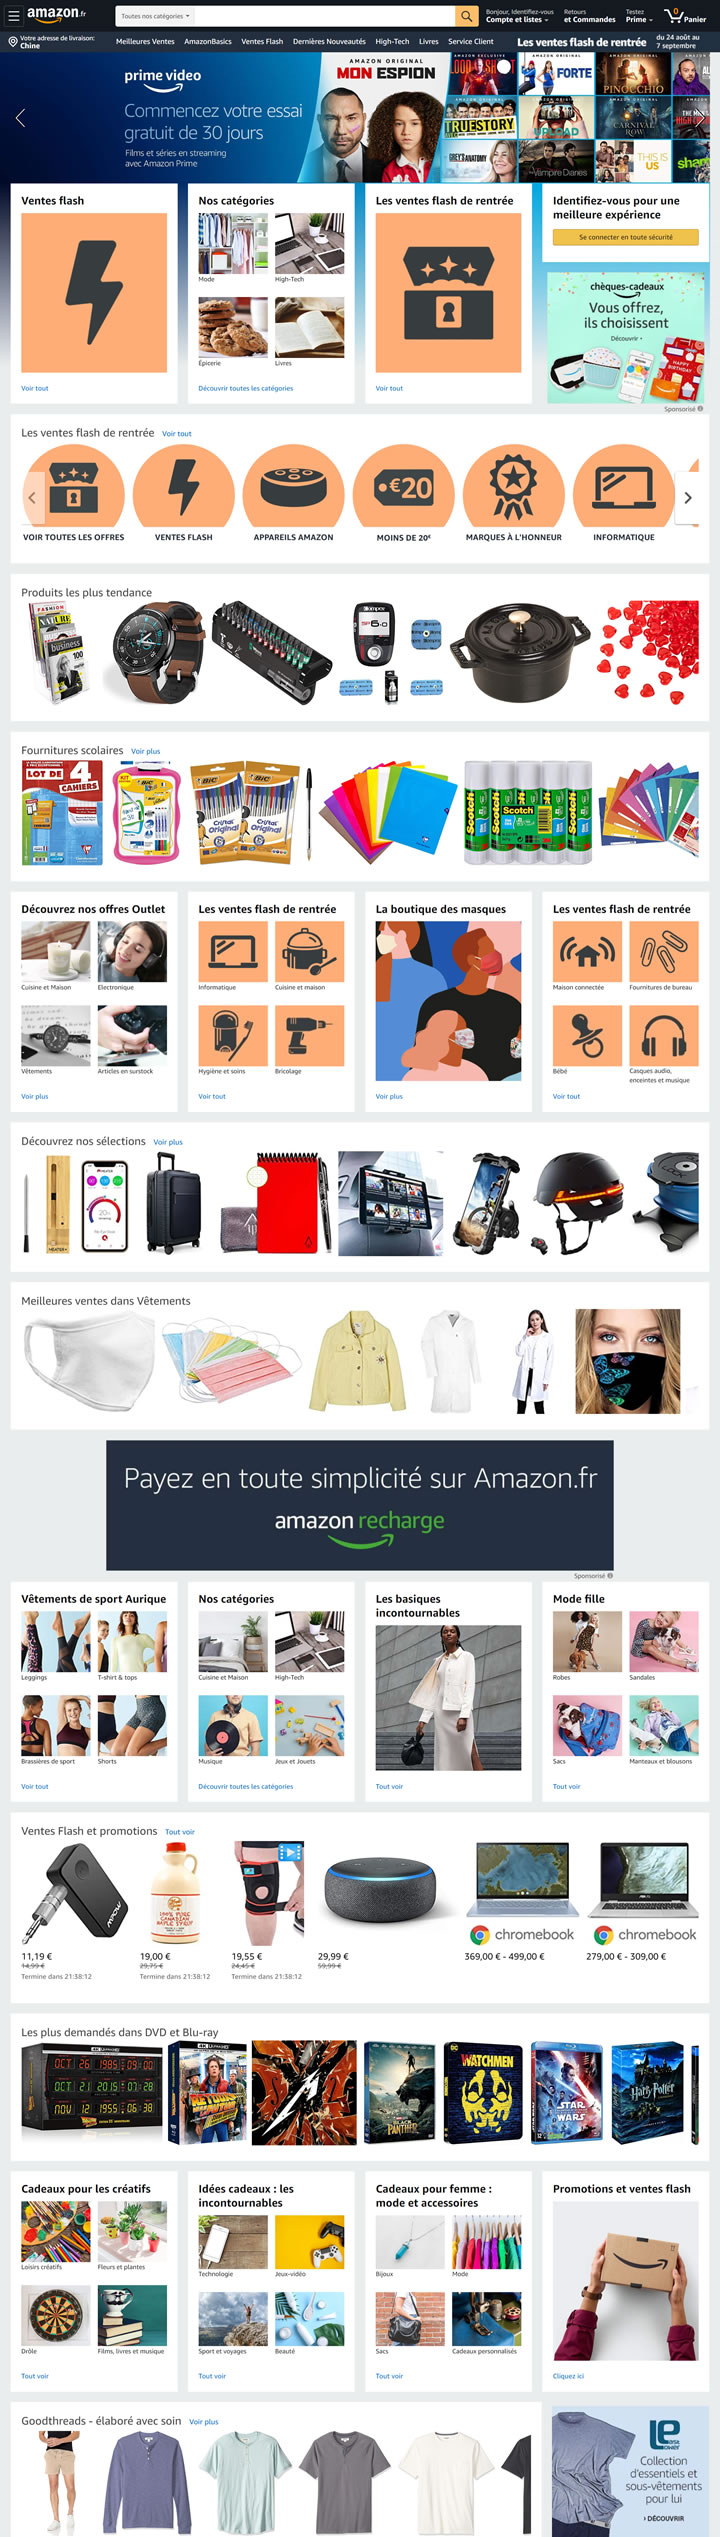 Amazon.fr法国官网